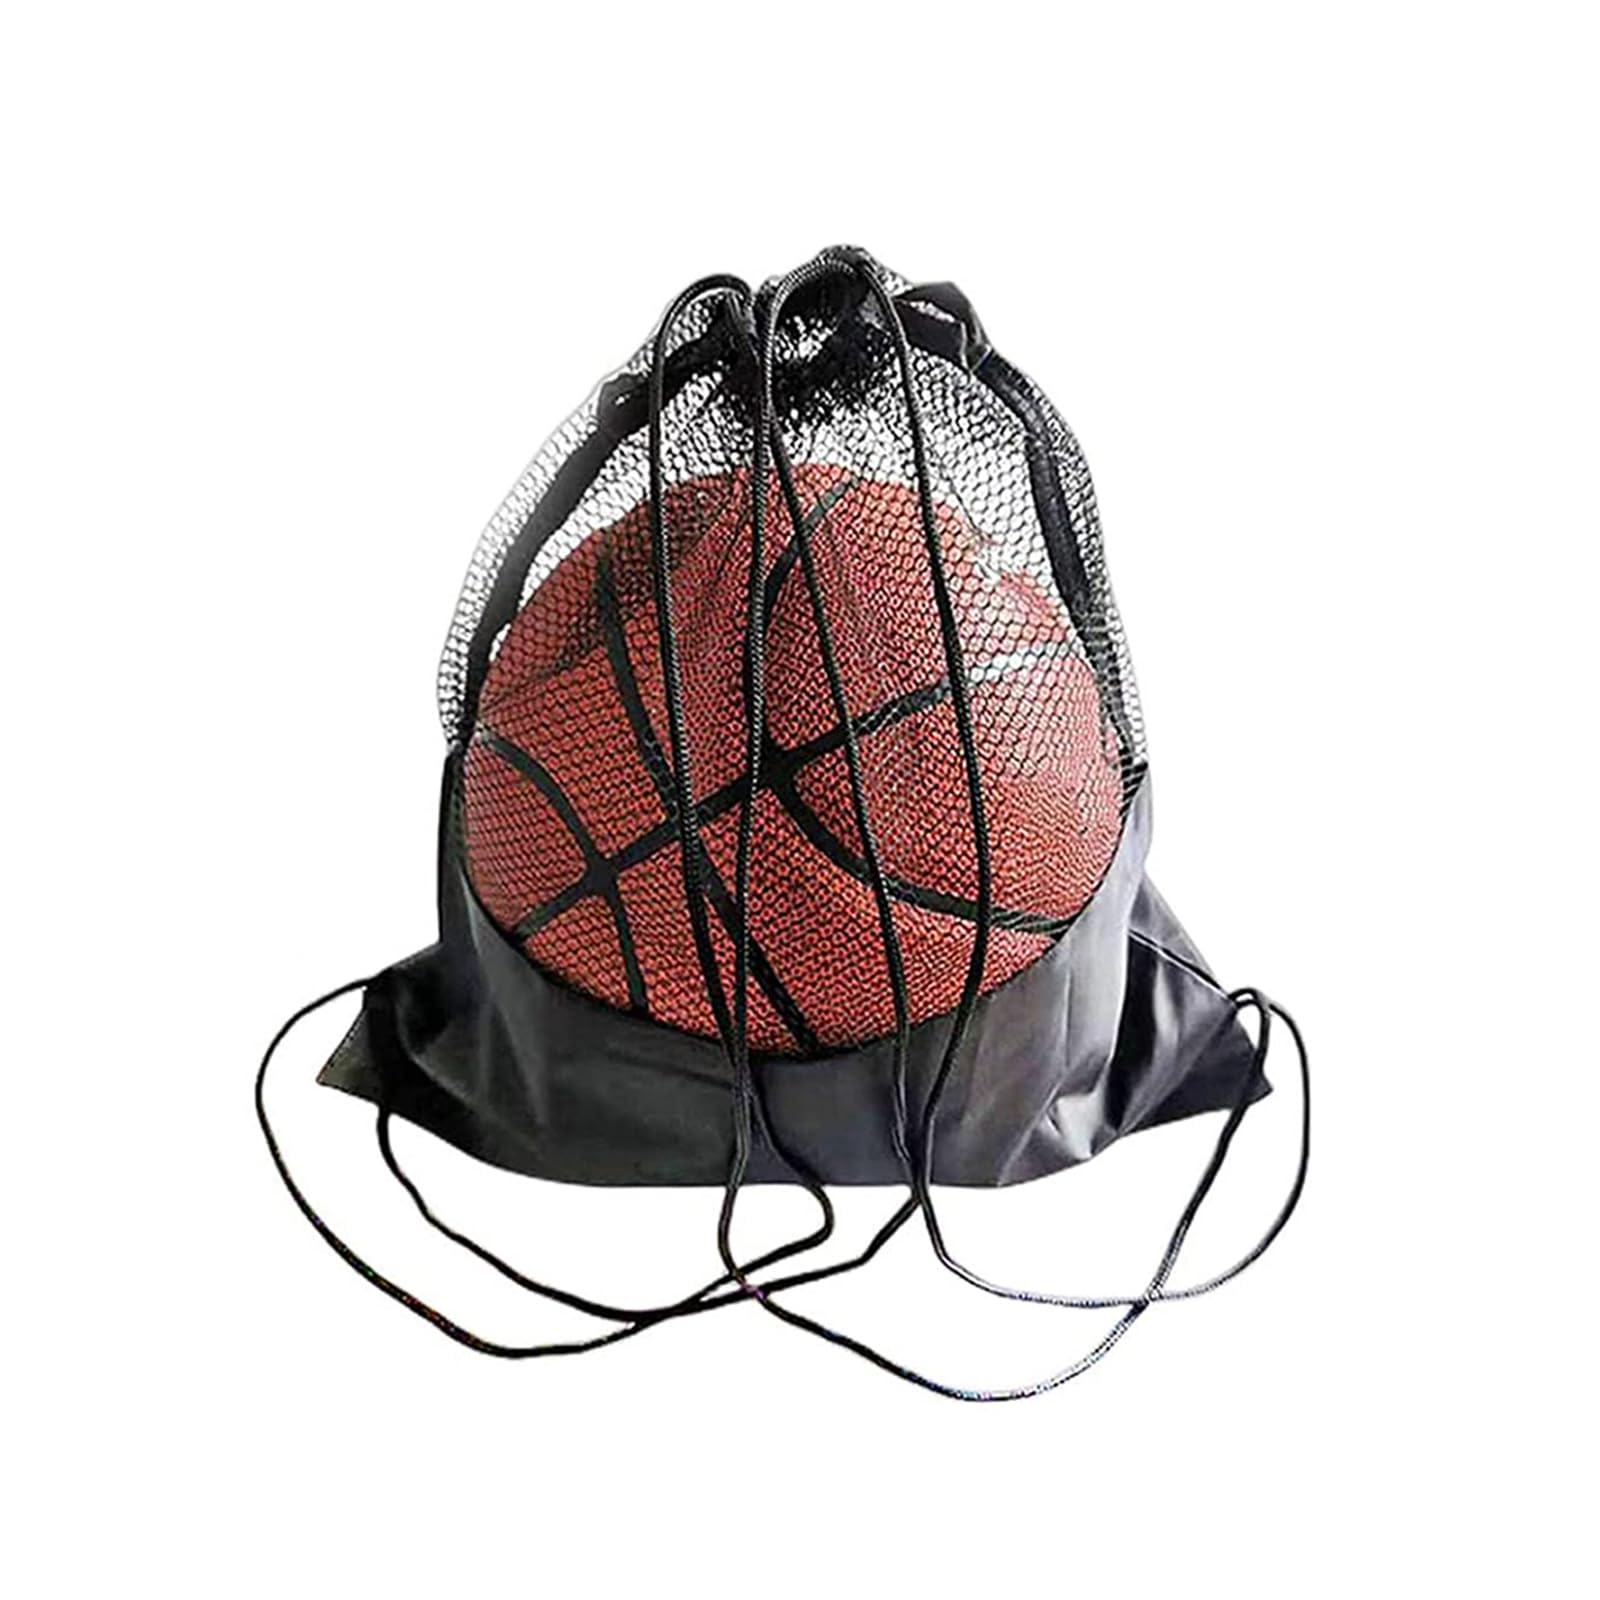 DFsucces ボールバッグ バスケット ポーチバッグ 耐久性 軽量 折りたたみ式 野球 テニス ラグビー リュック 携帯便利 多機能 収納 (1個セット, ブラック)